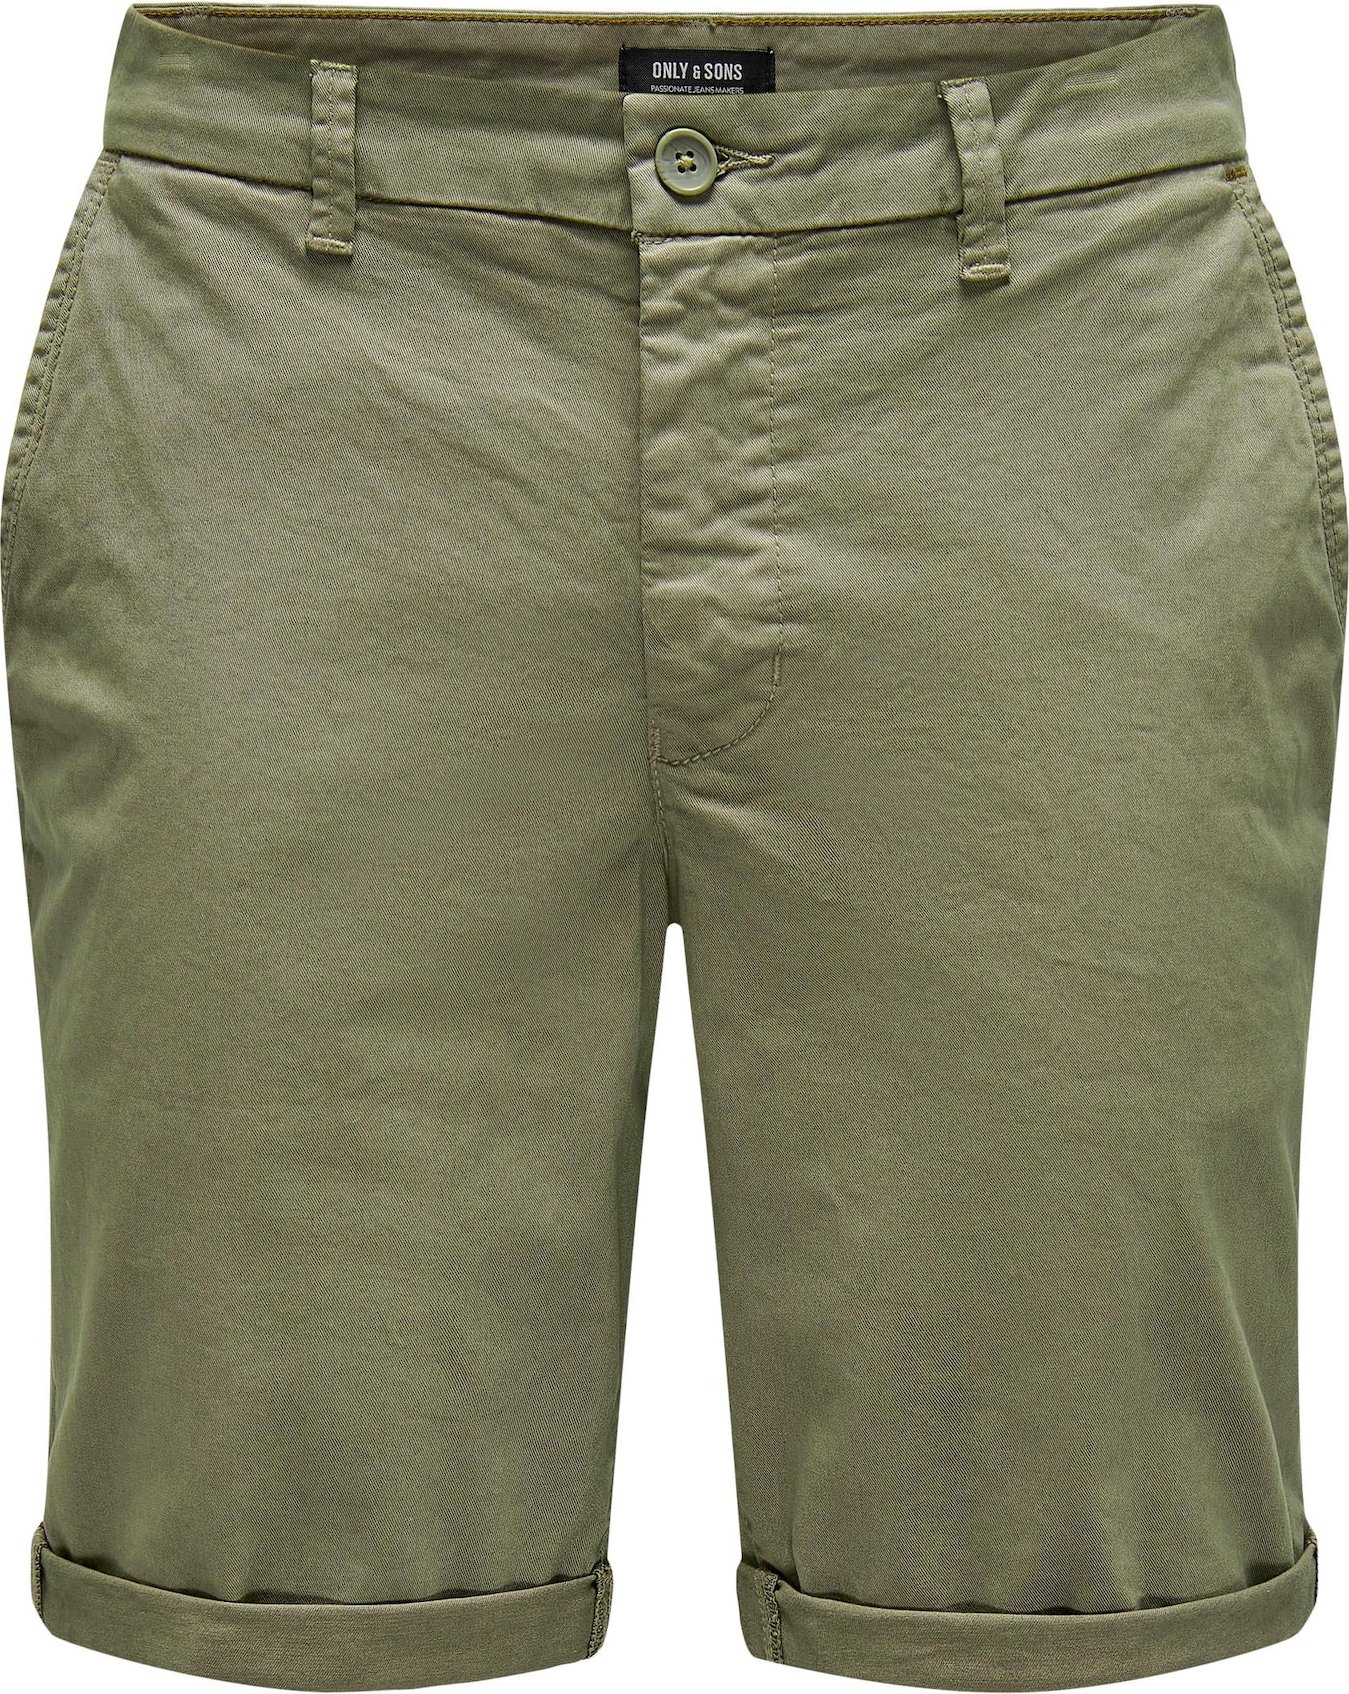 Chino kalhoty 'Peter' Only & Sons khaki